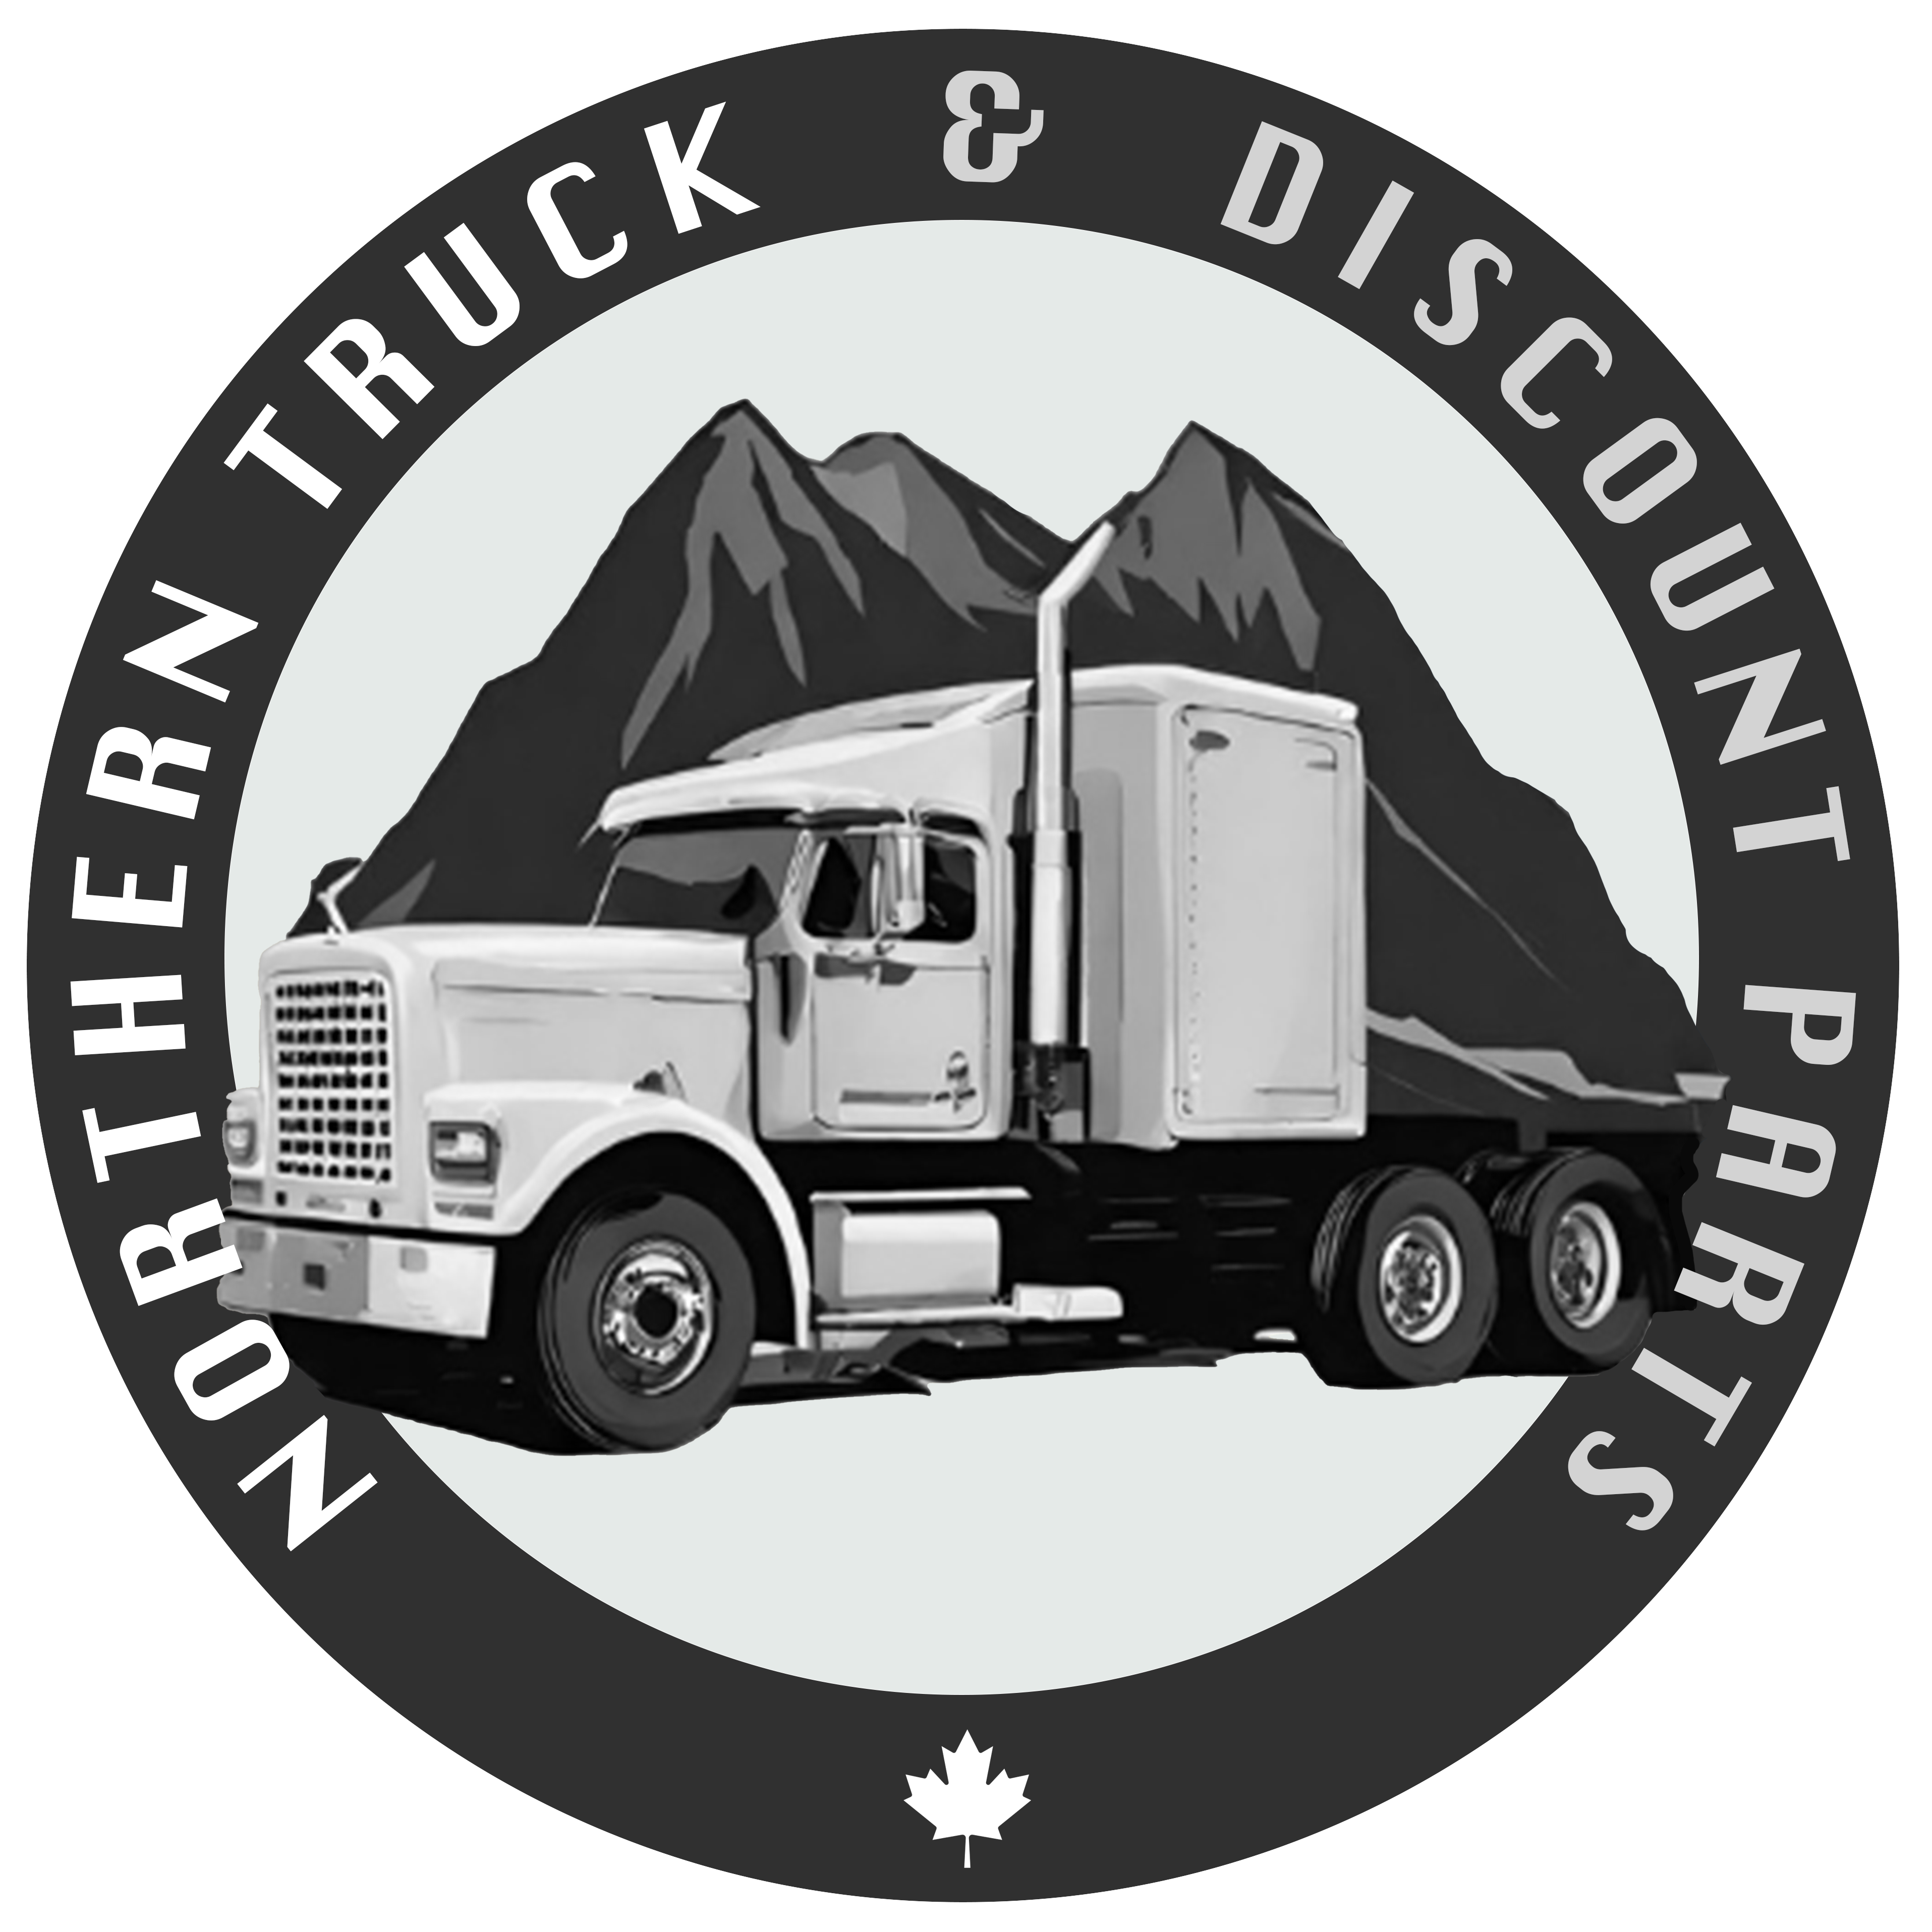 Northern Truck & Discount Parts